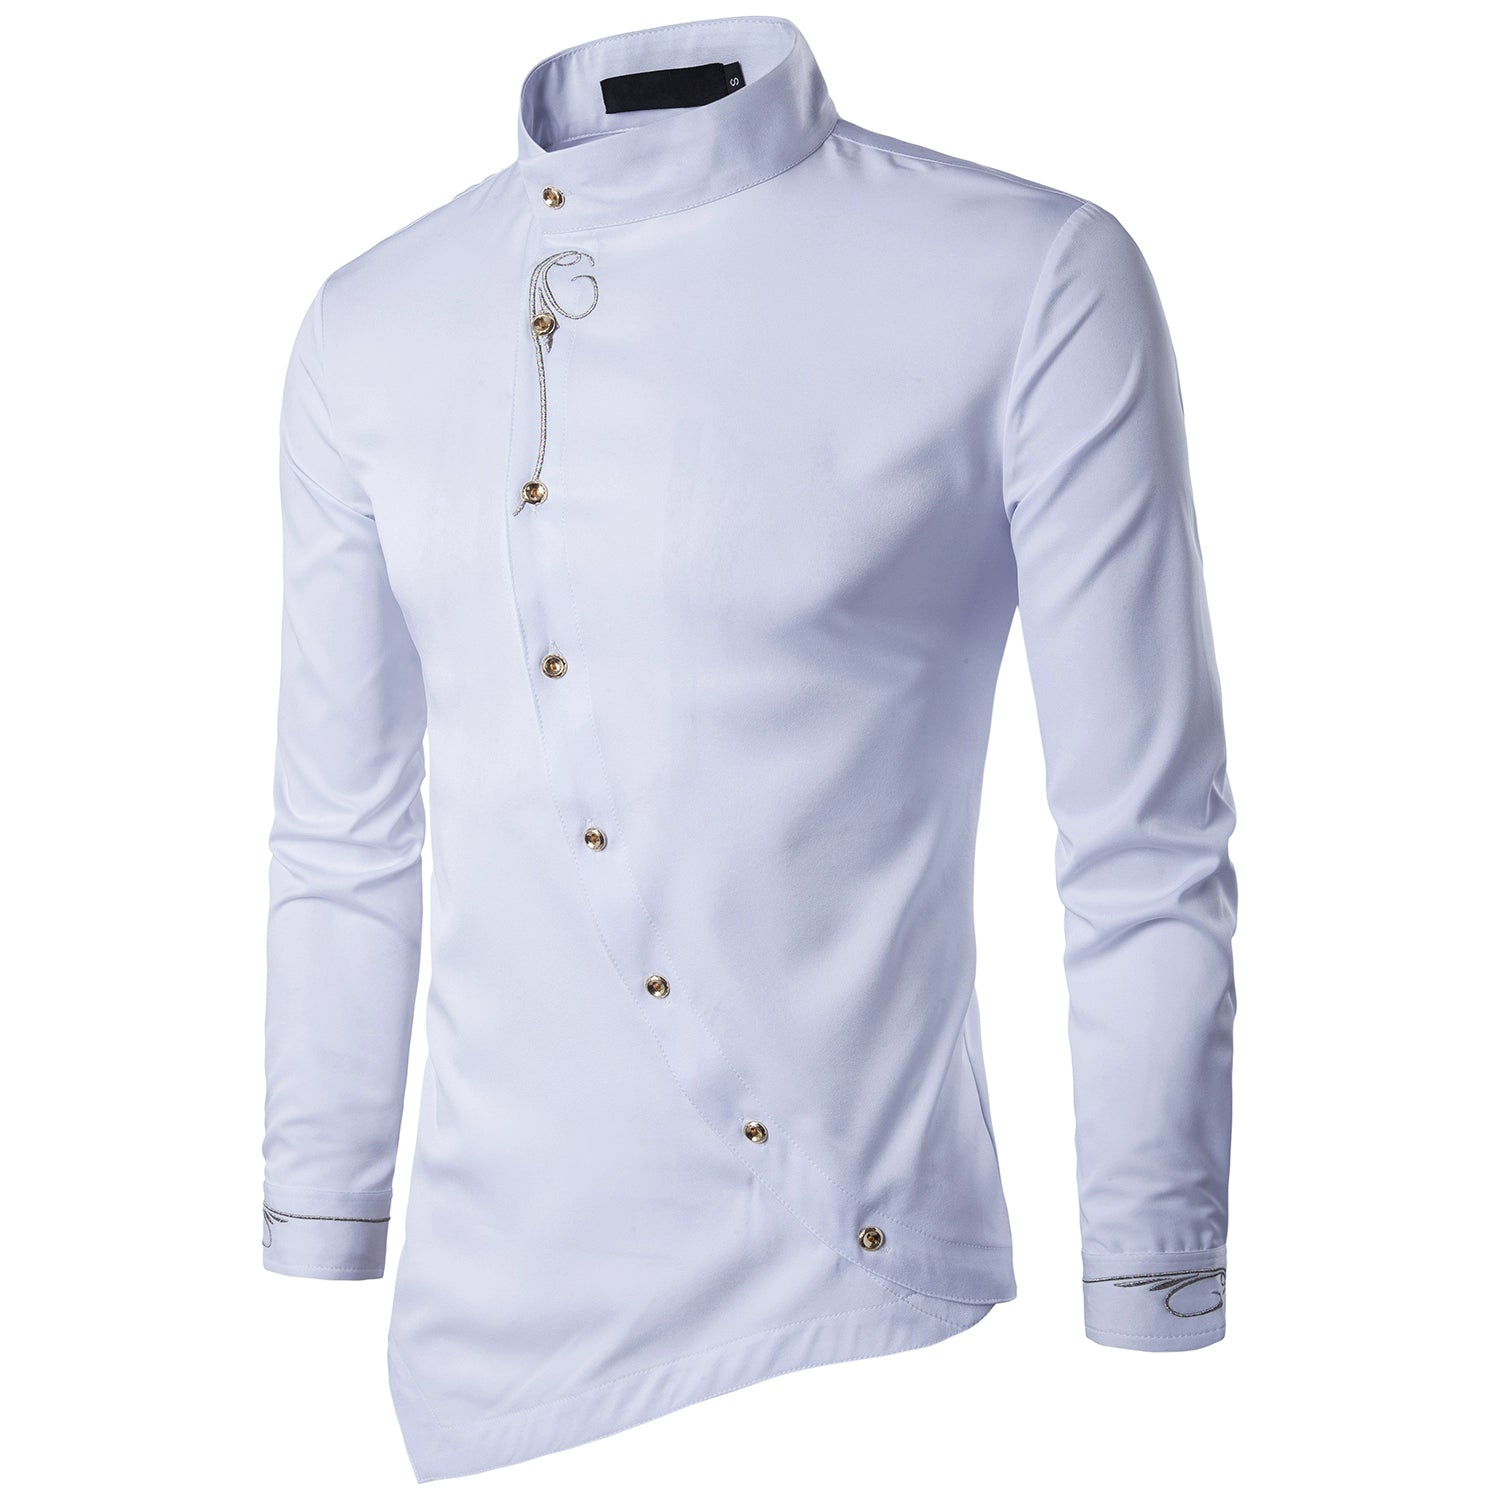 Xcarii Xii - American-D-B, Collar Shirt